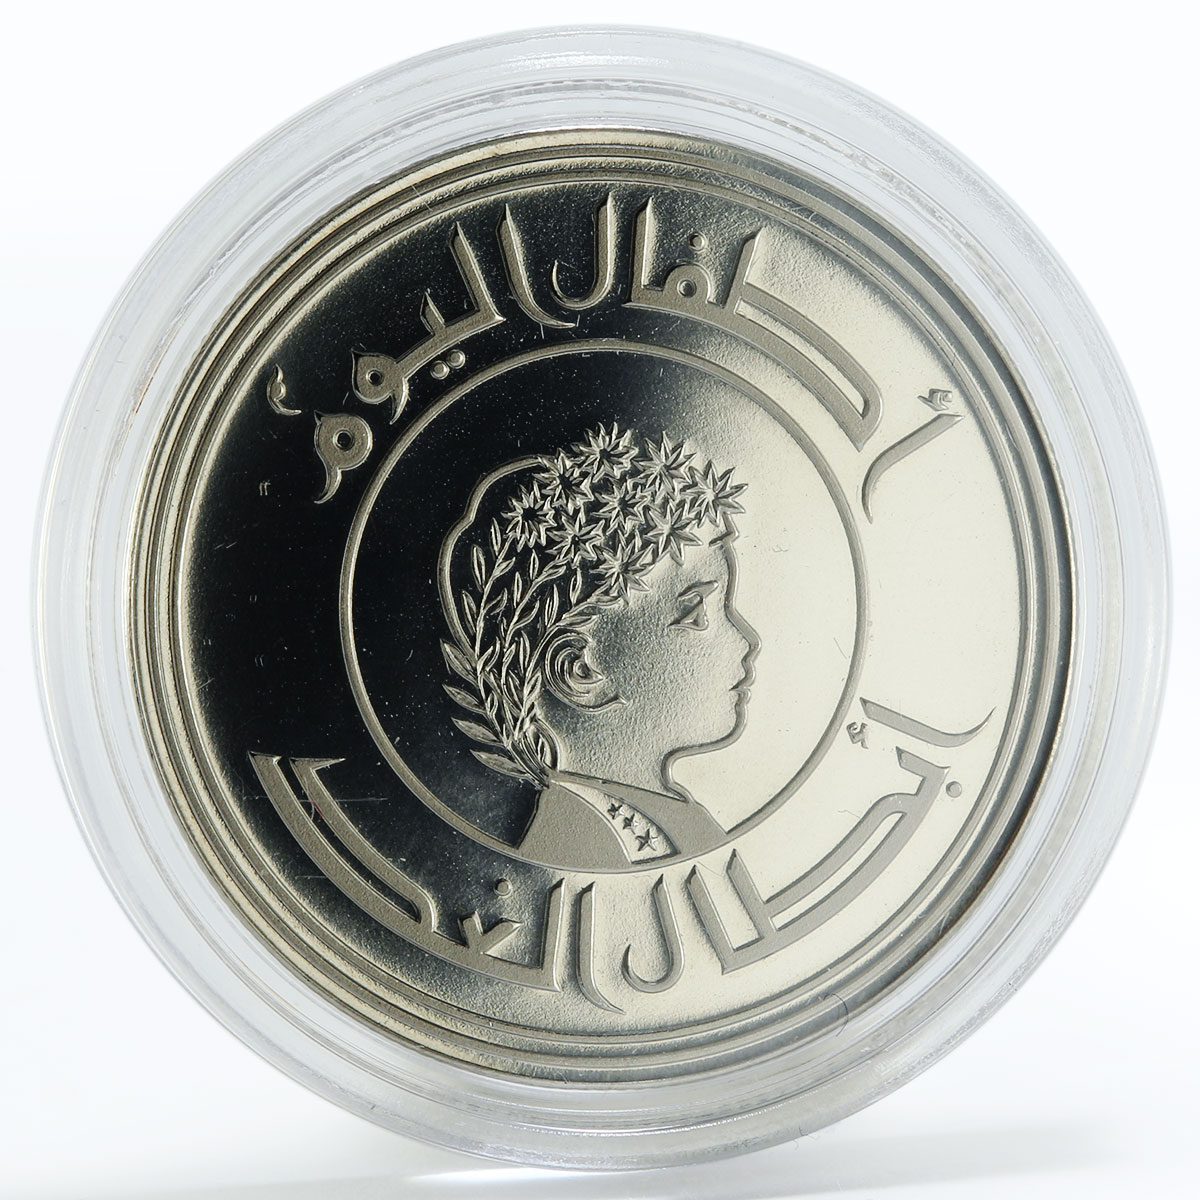 Iraq 250 fils Year of Child proof nickel coin 1979